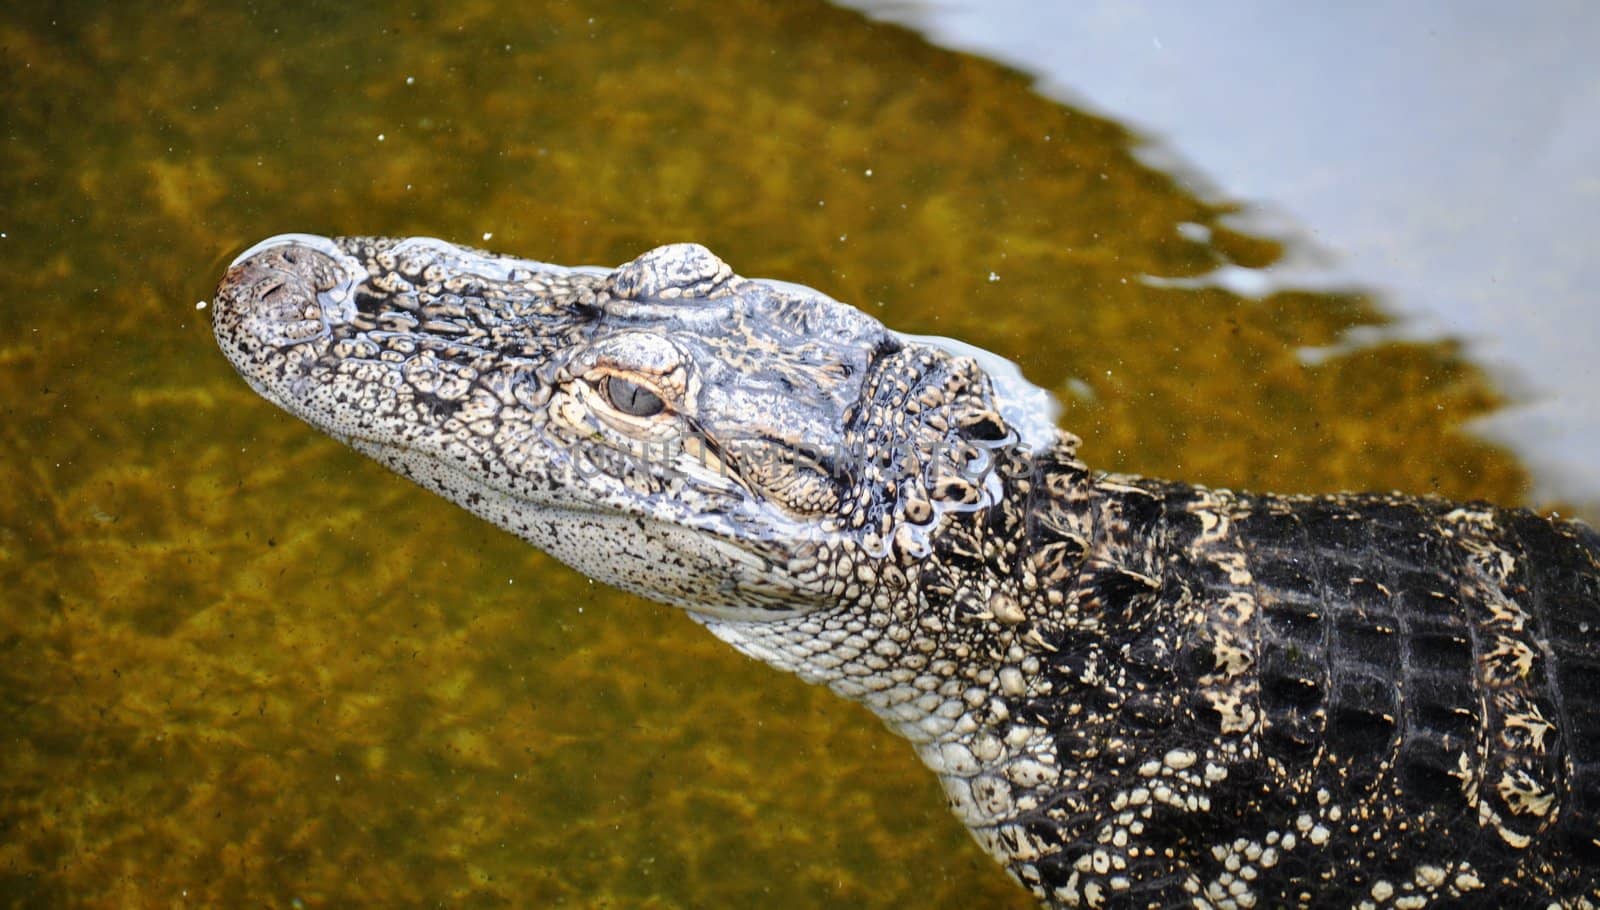 Alligator smile by RefocusPhoto